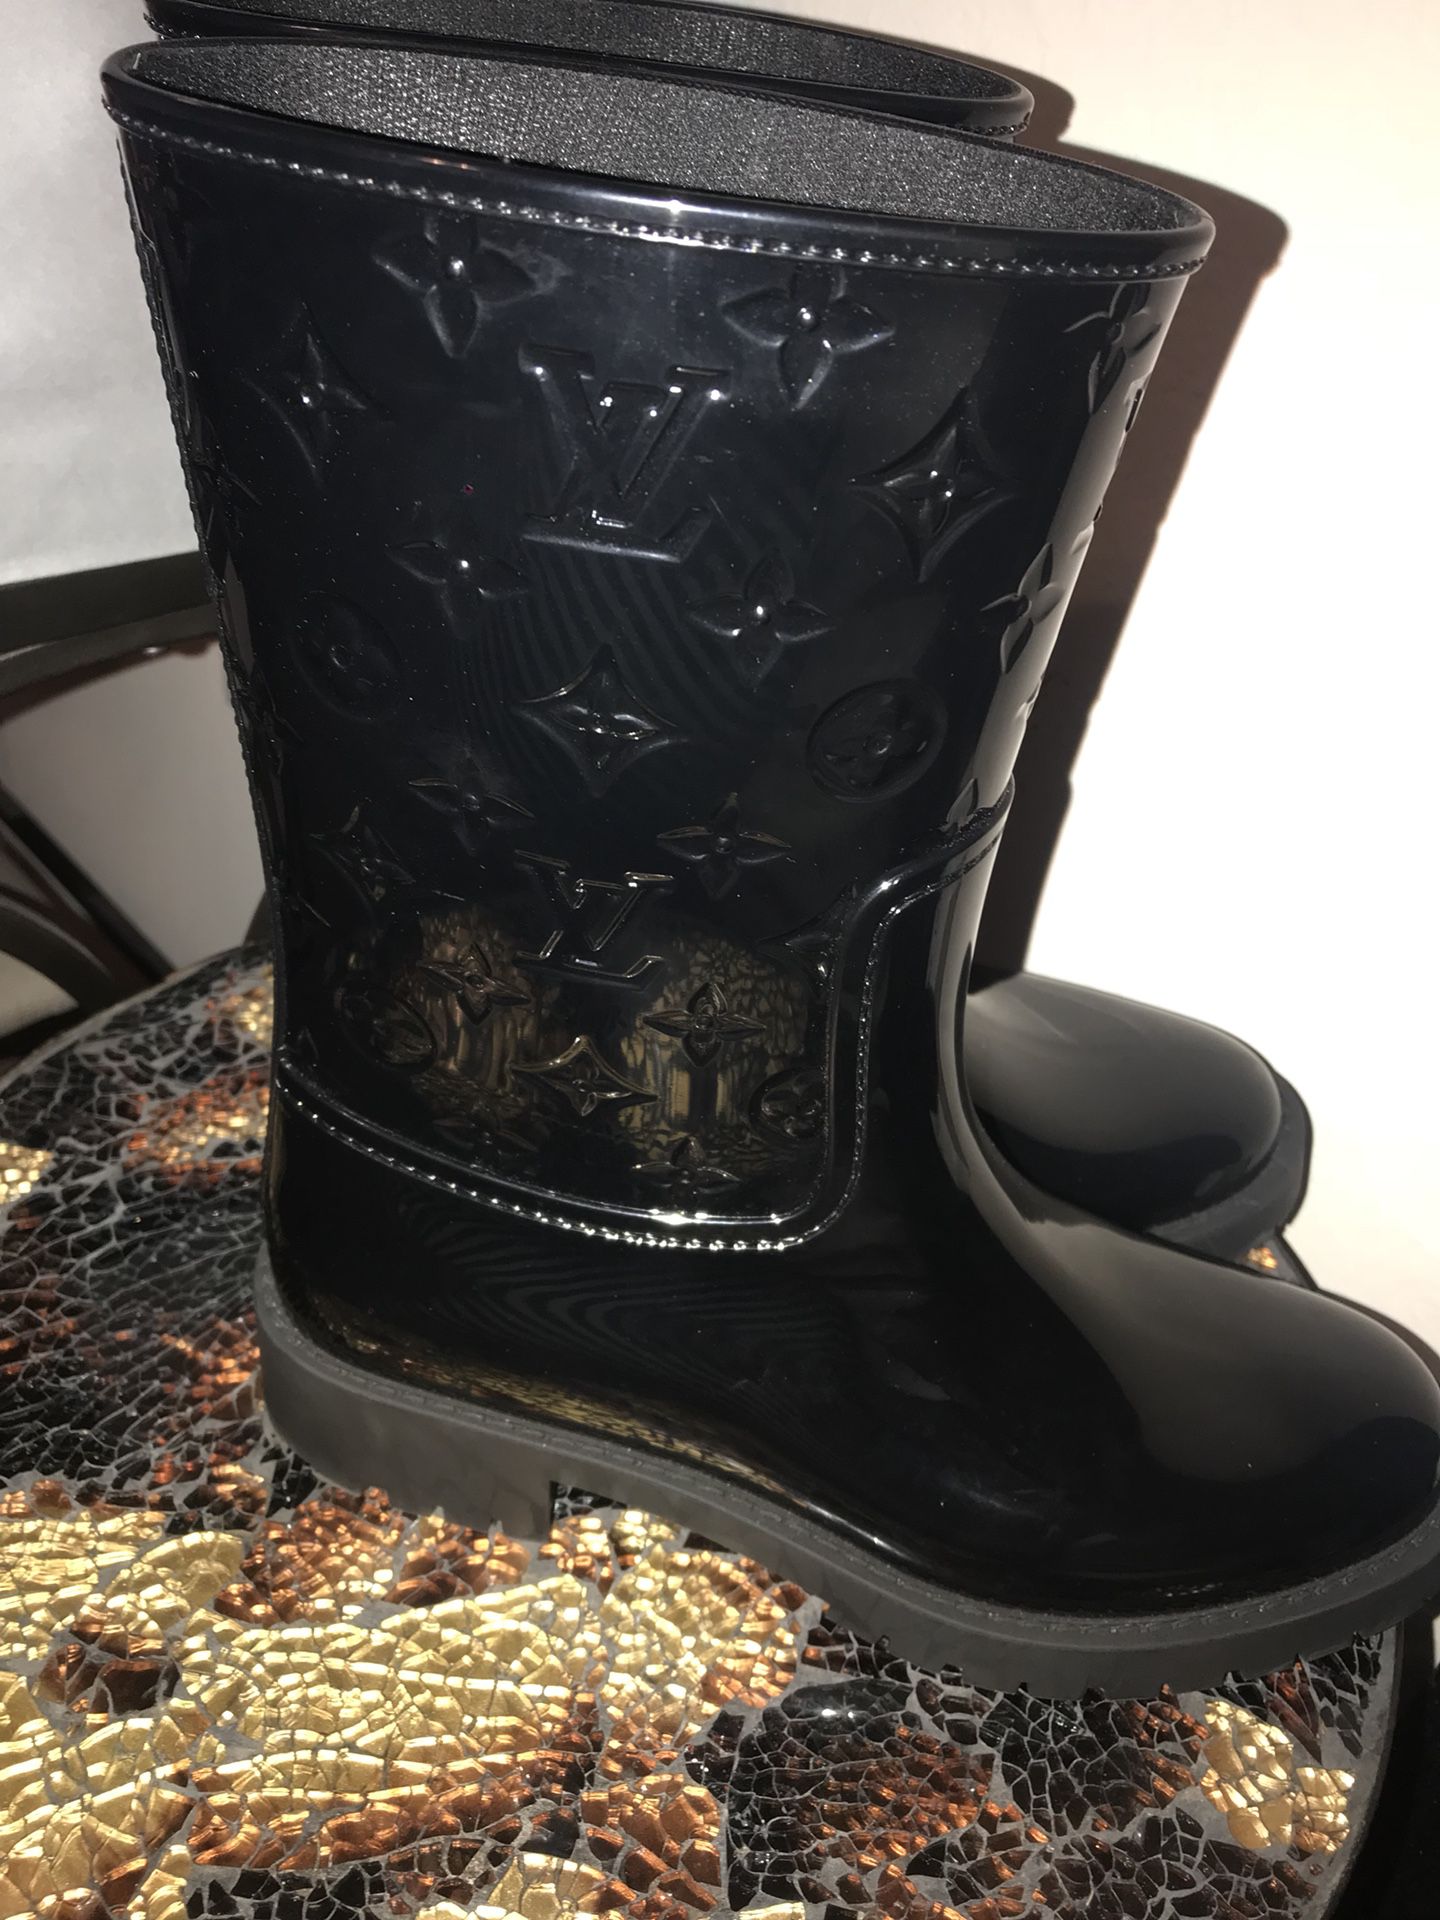 vuitton rain boots